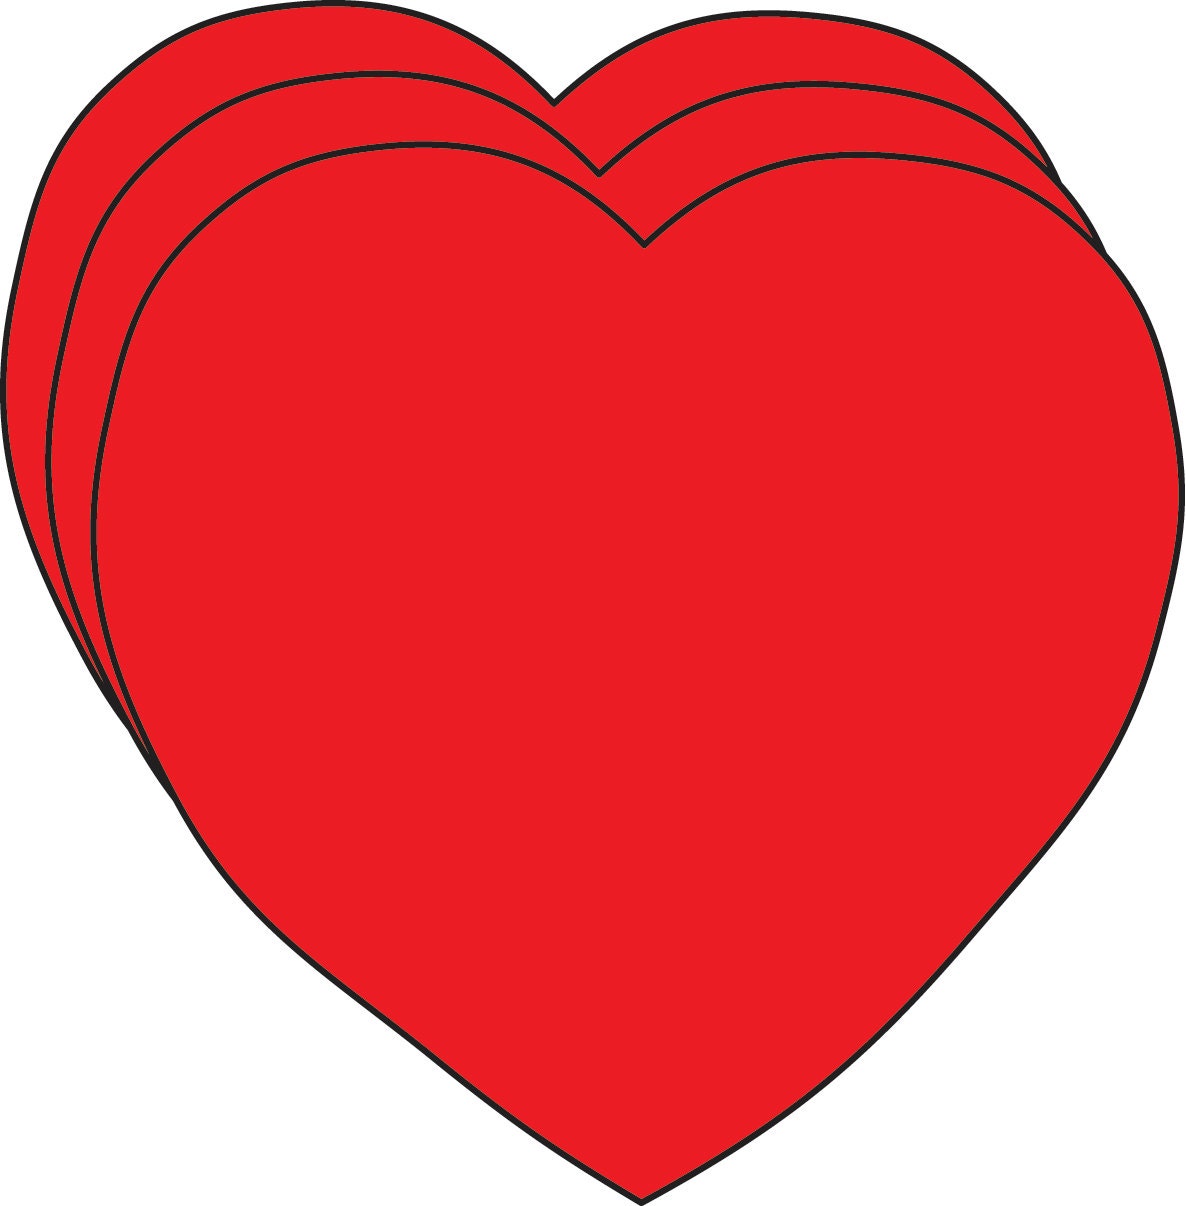 50 Pink Heart Die Cuts Valentine Cutouts 2 Inch Heart Cutouts 